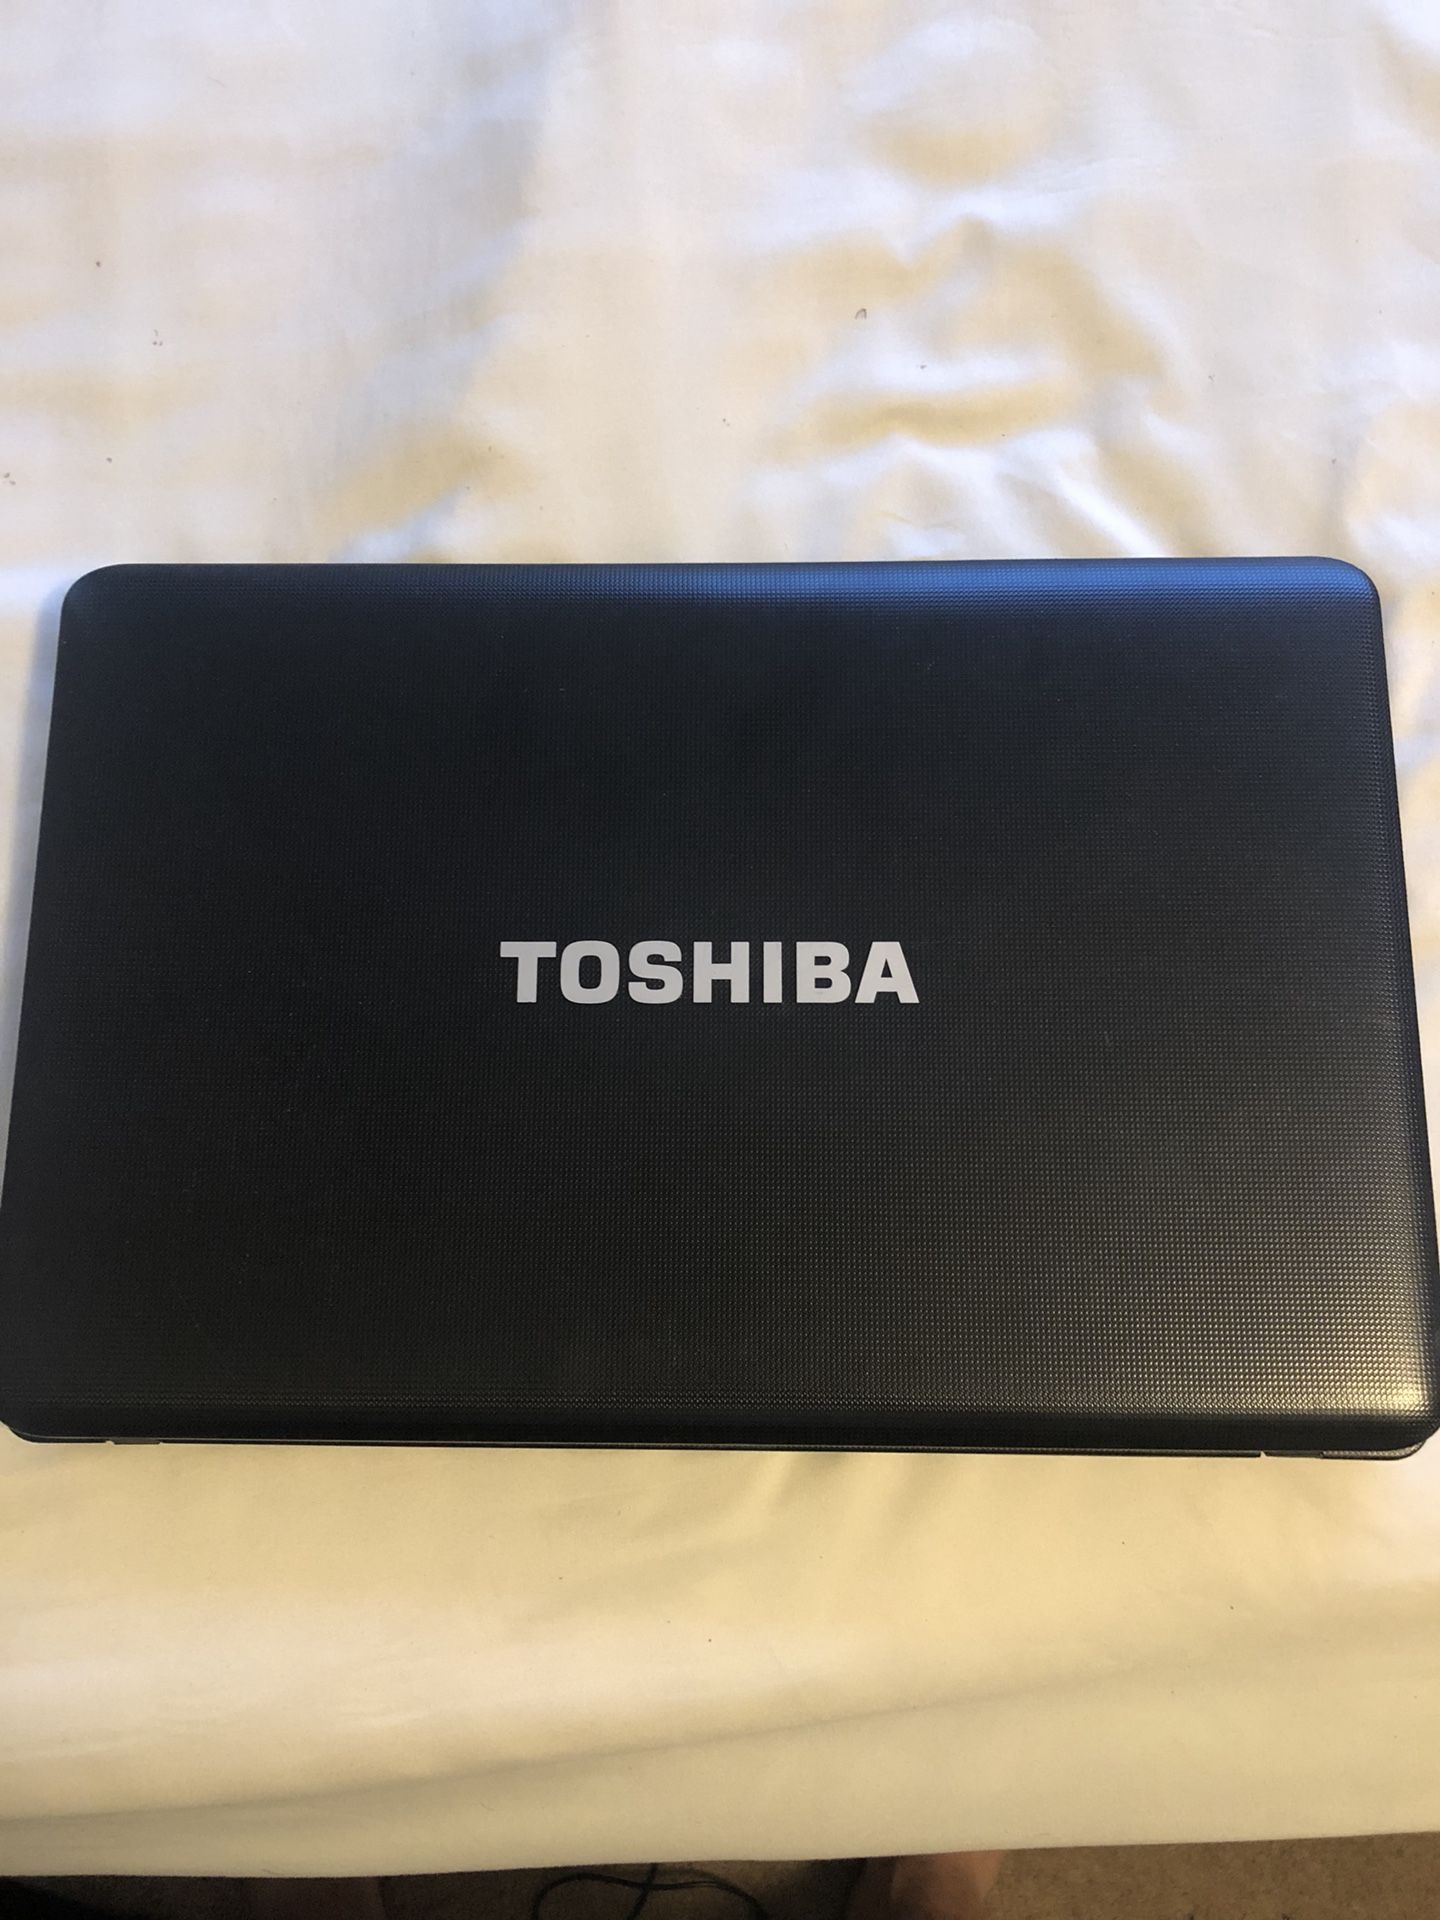 Toshiba Satellite C655D-S5300 Laptop